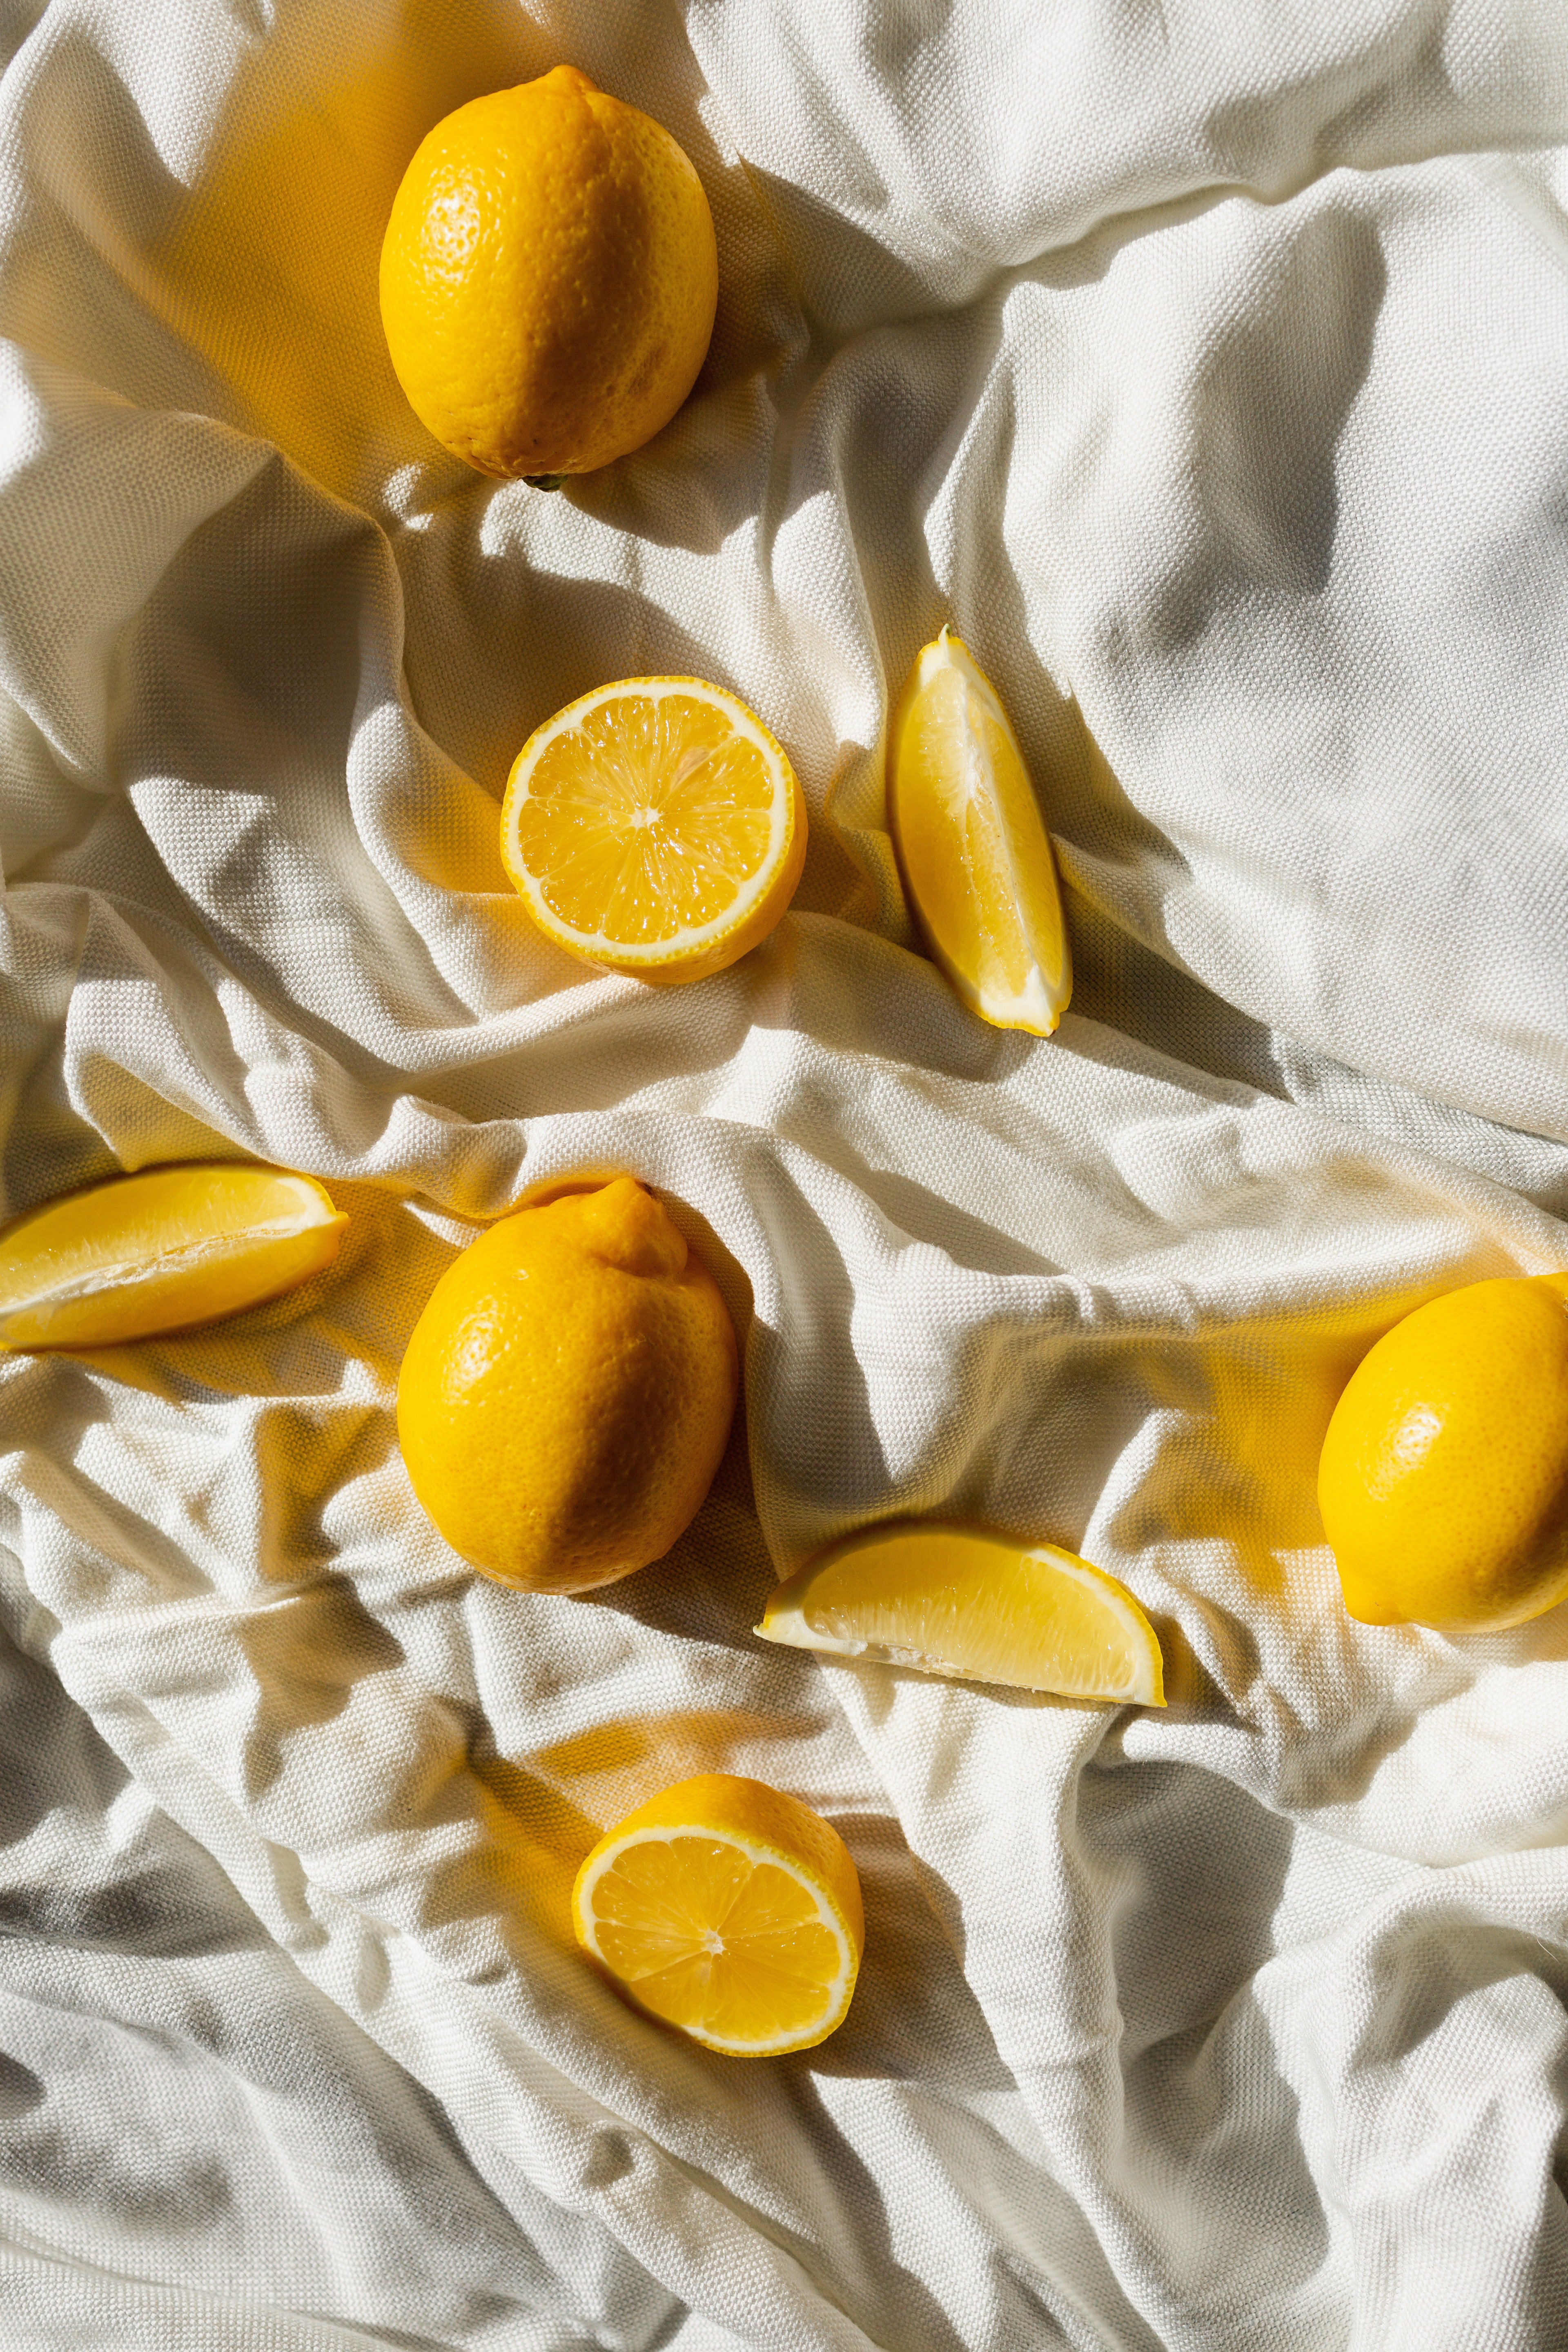 Whole lemons and lemon slices on a white cloth